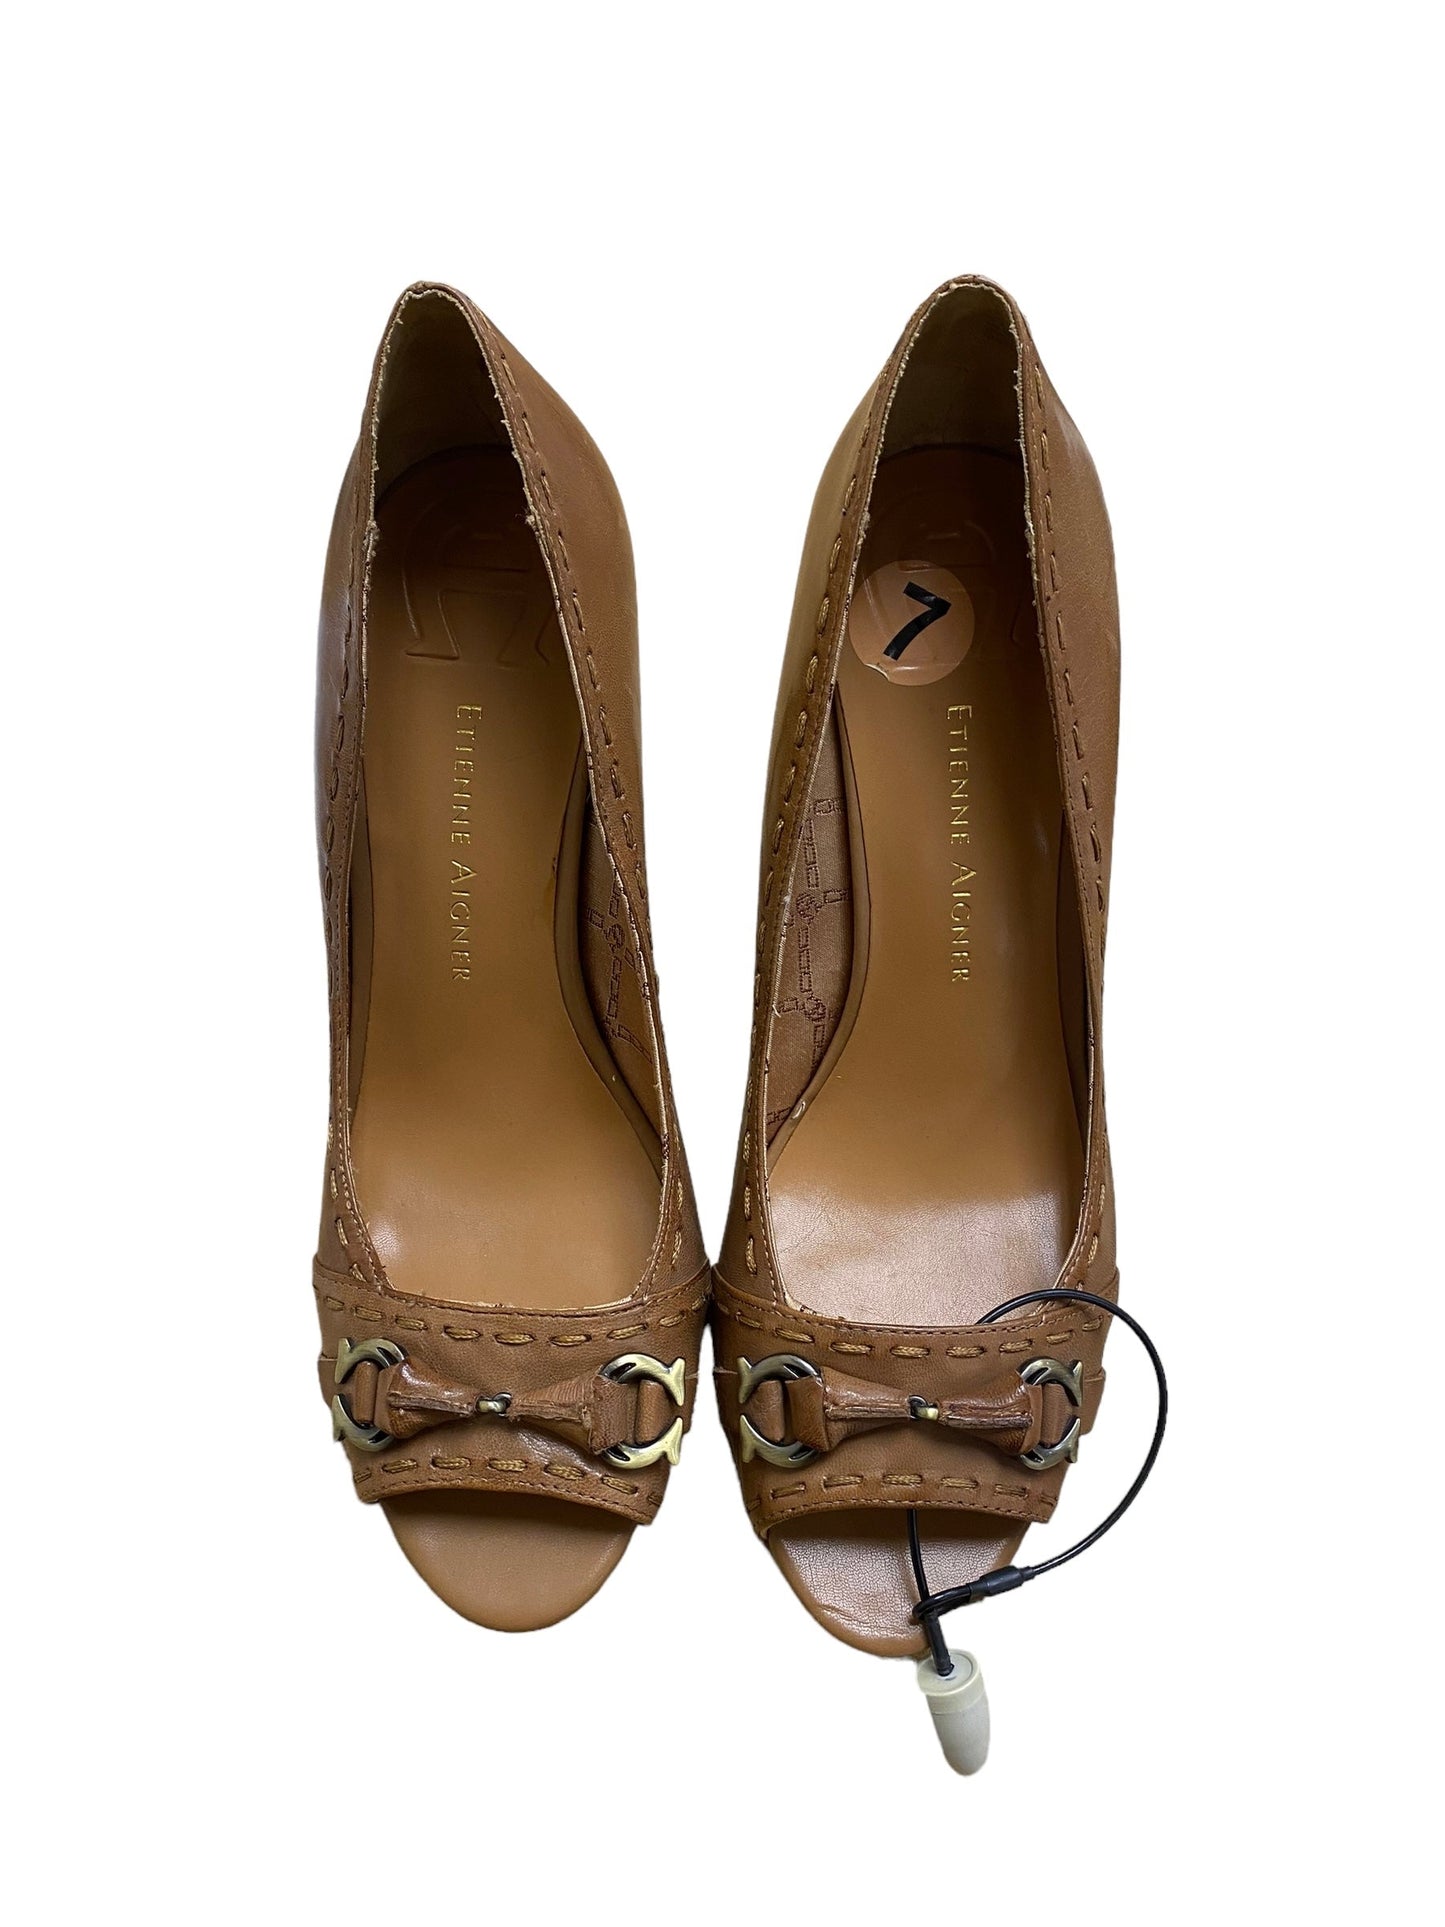 Brown Shoes Heels Stiletto Etienne Aigner, Size 7